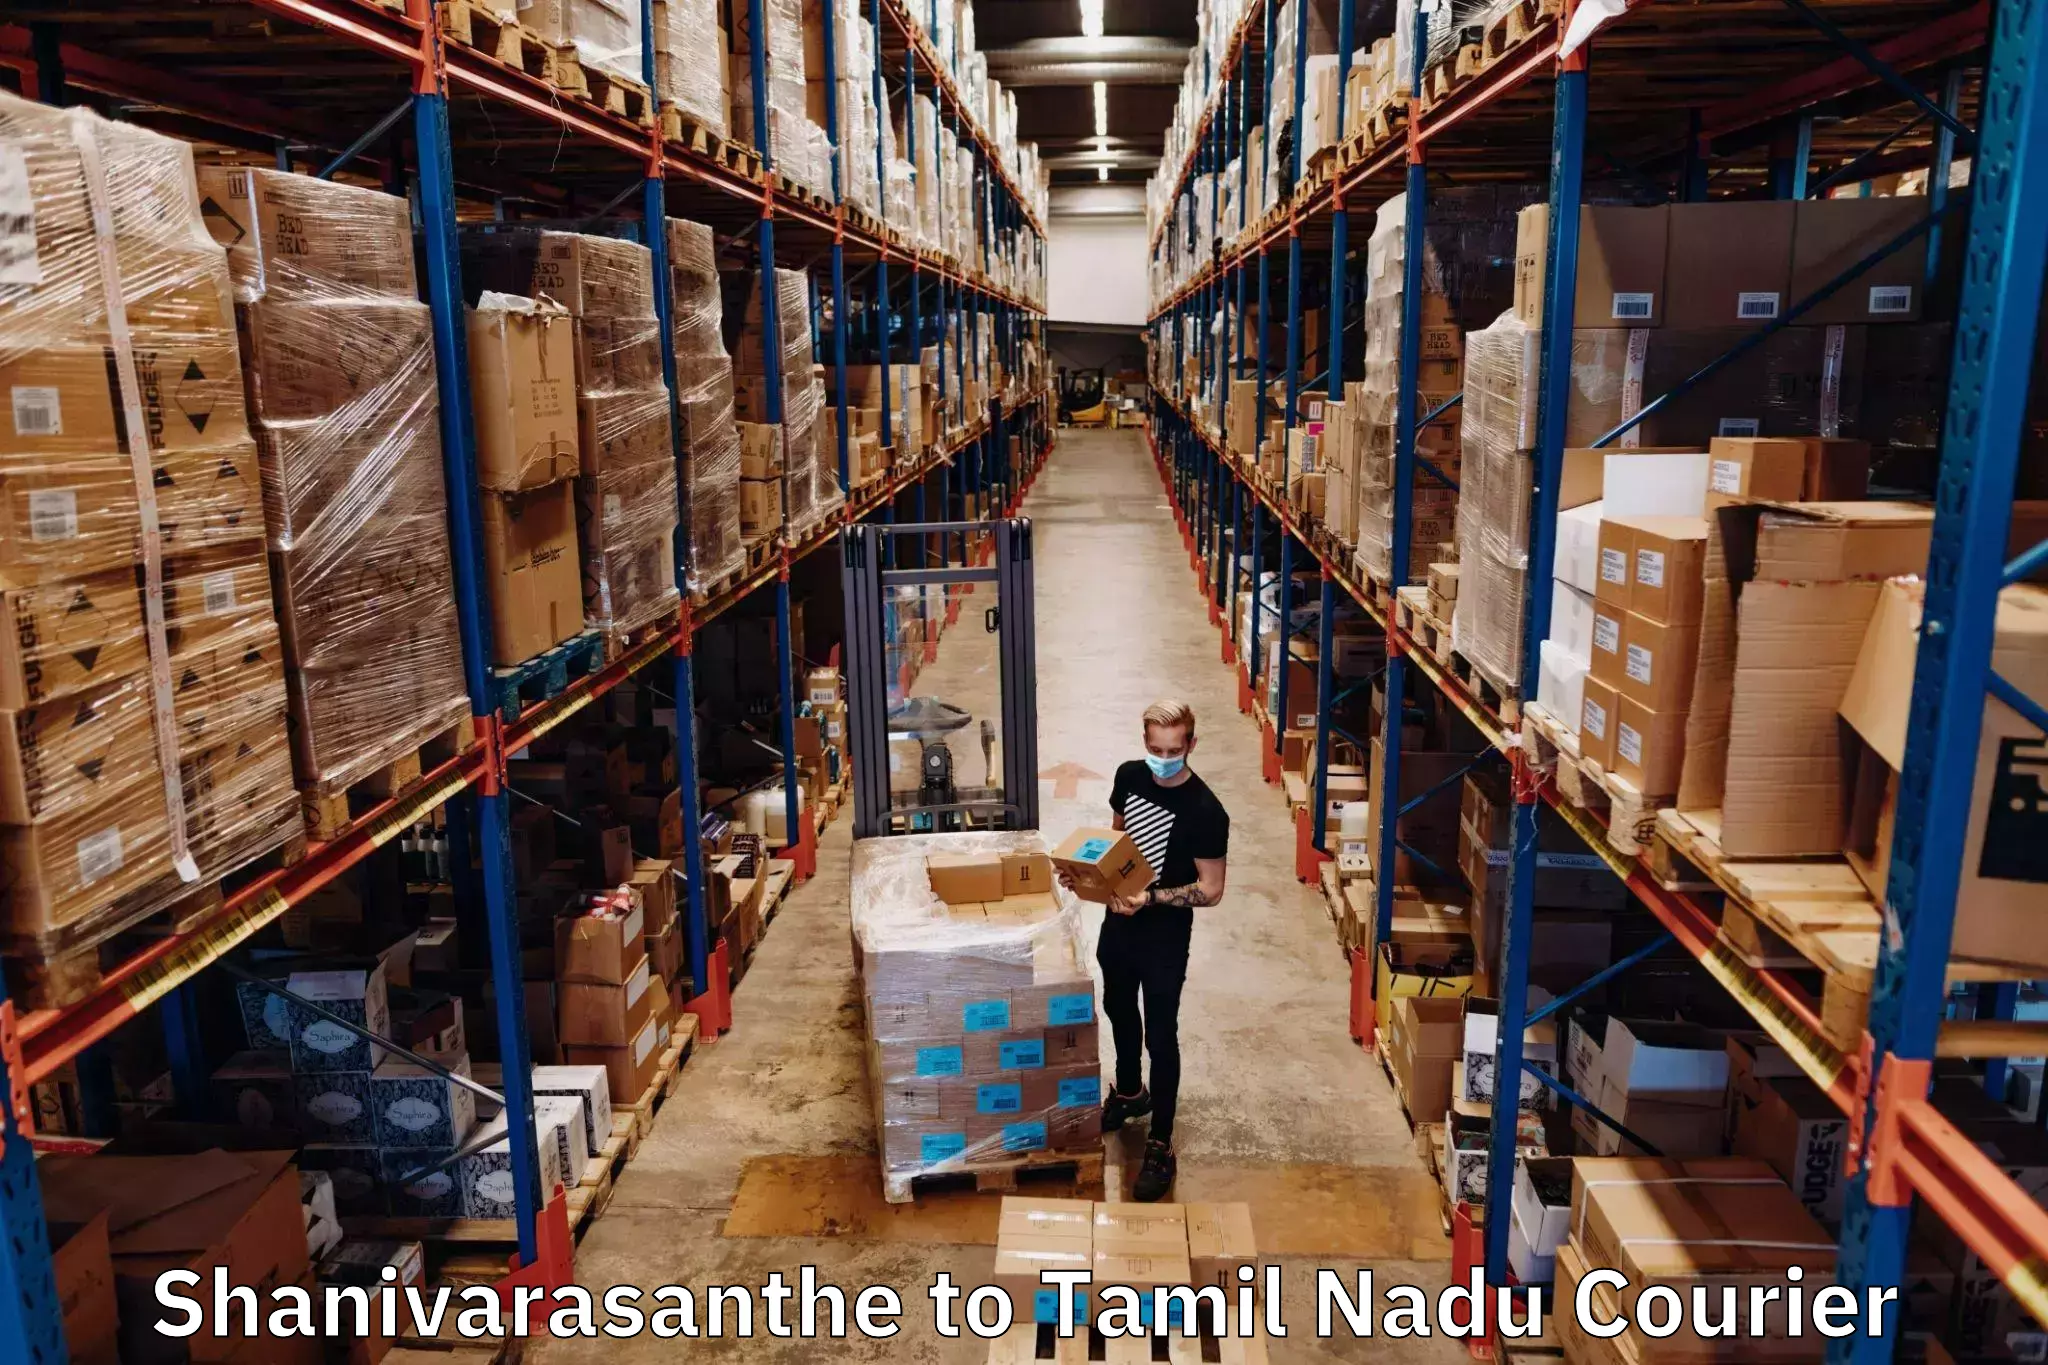 Courier app Shanivarasanthe to Tamil Nadu